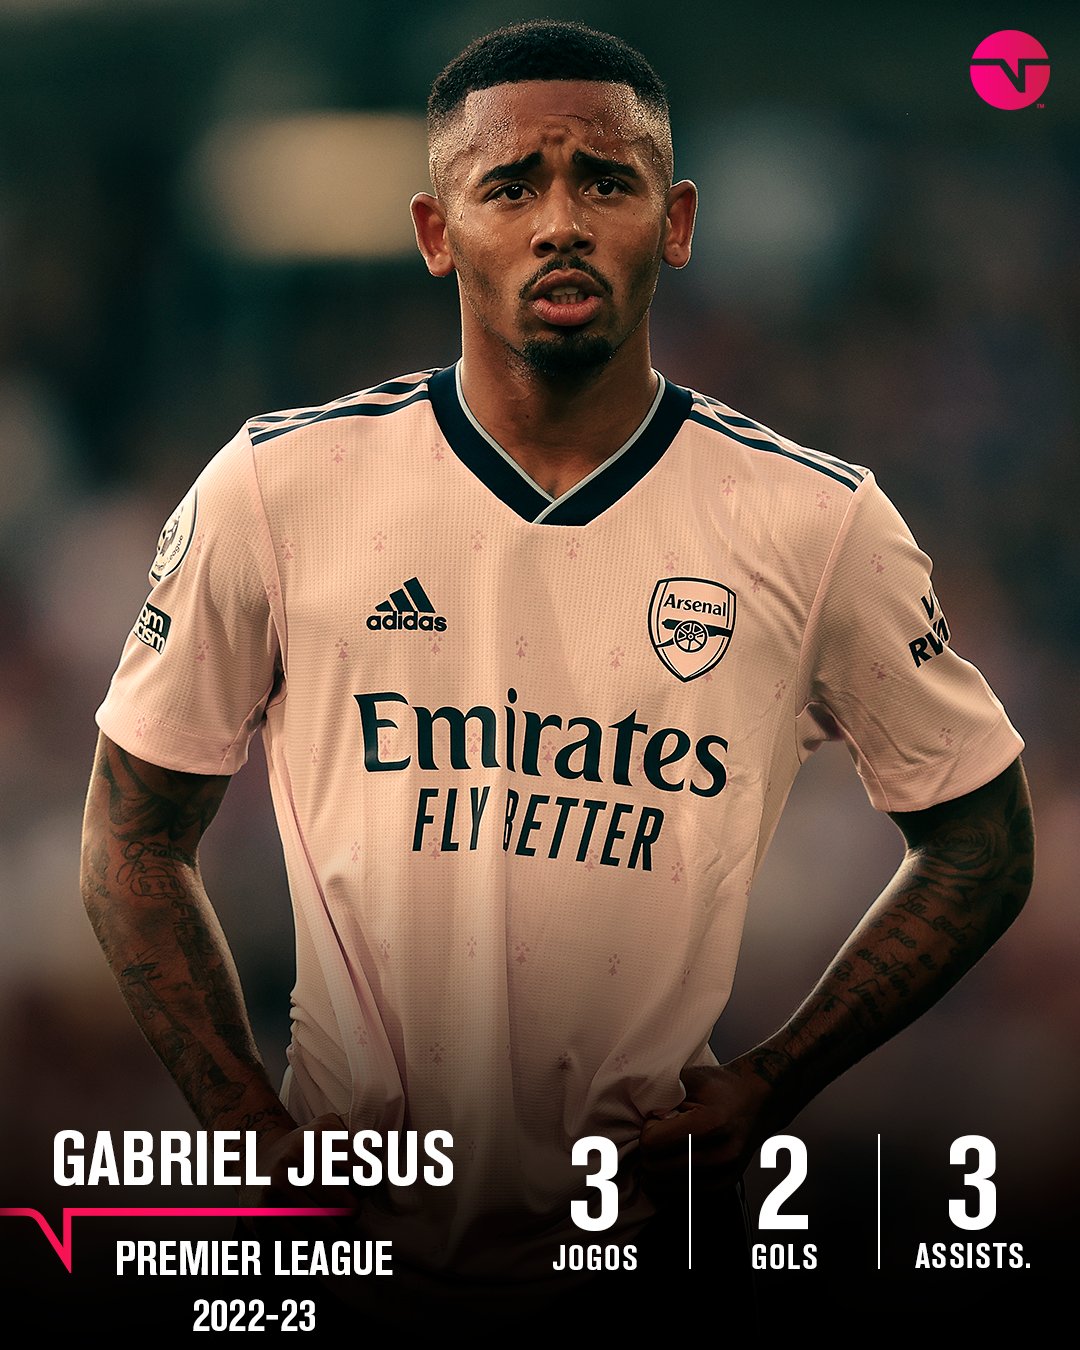 Gol do Gabriel Jesus hoje 🤫🔥 #gabrieljesus #jesus #arsenal